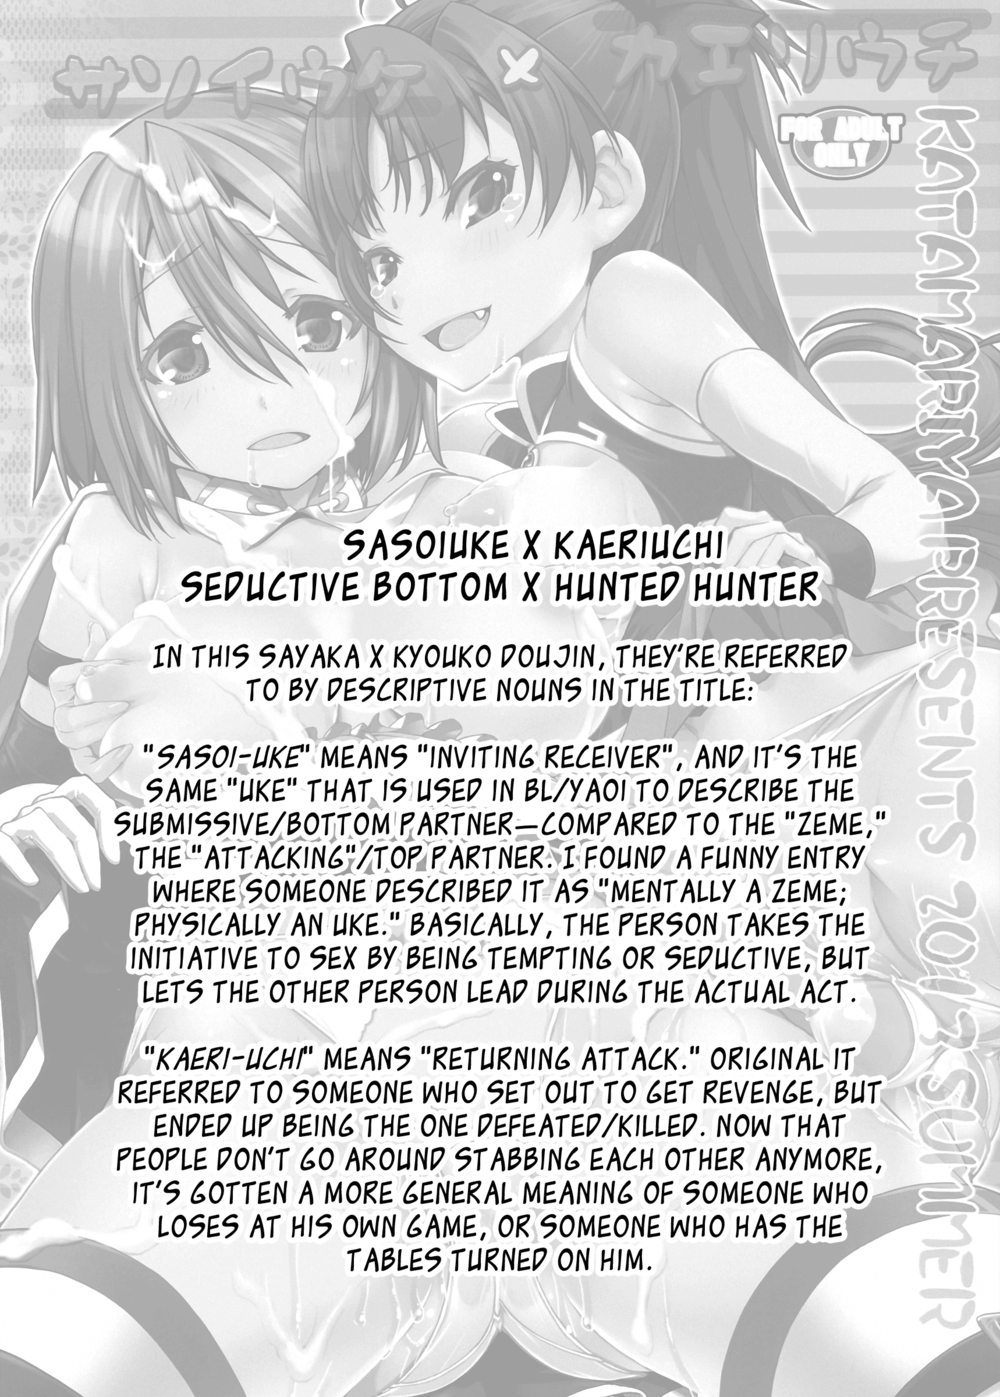 Hentai Manga Comic-Seductive Bottom x Hunted Hunter-Read-2